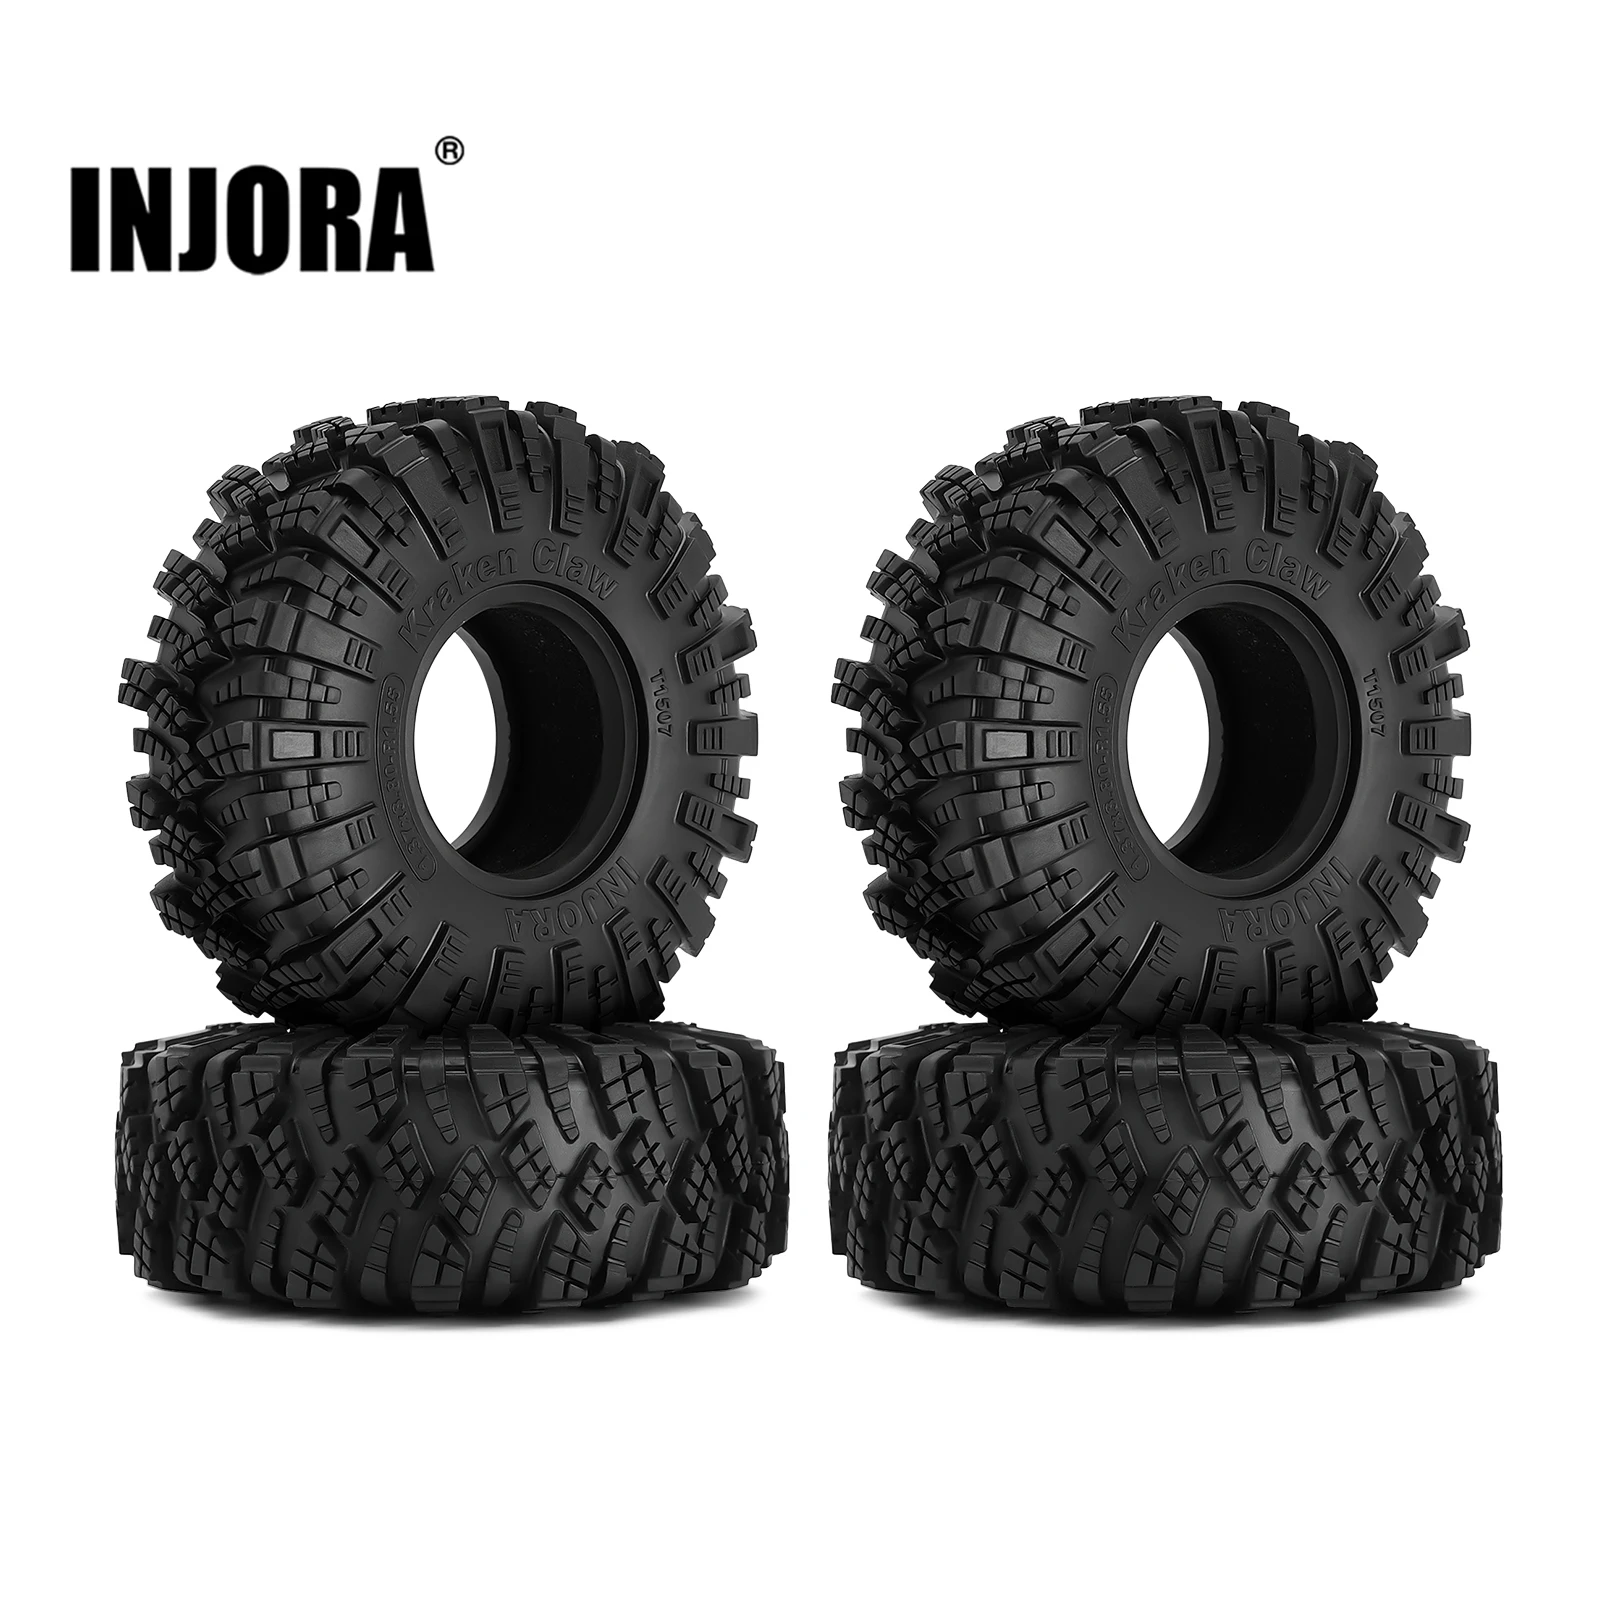 INJORA-Kraken-Claw-1-55-Mud-Terrain-Wheel-Tires-for-RC-Crawler-Car-Axial-AX90069-UTB18.webp